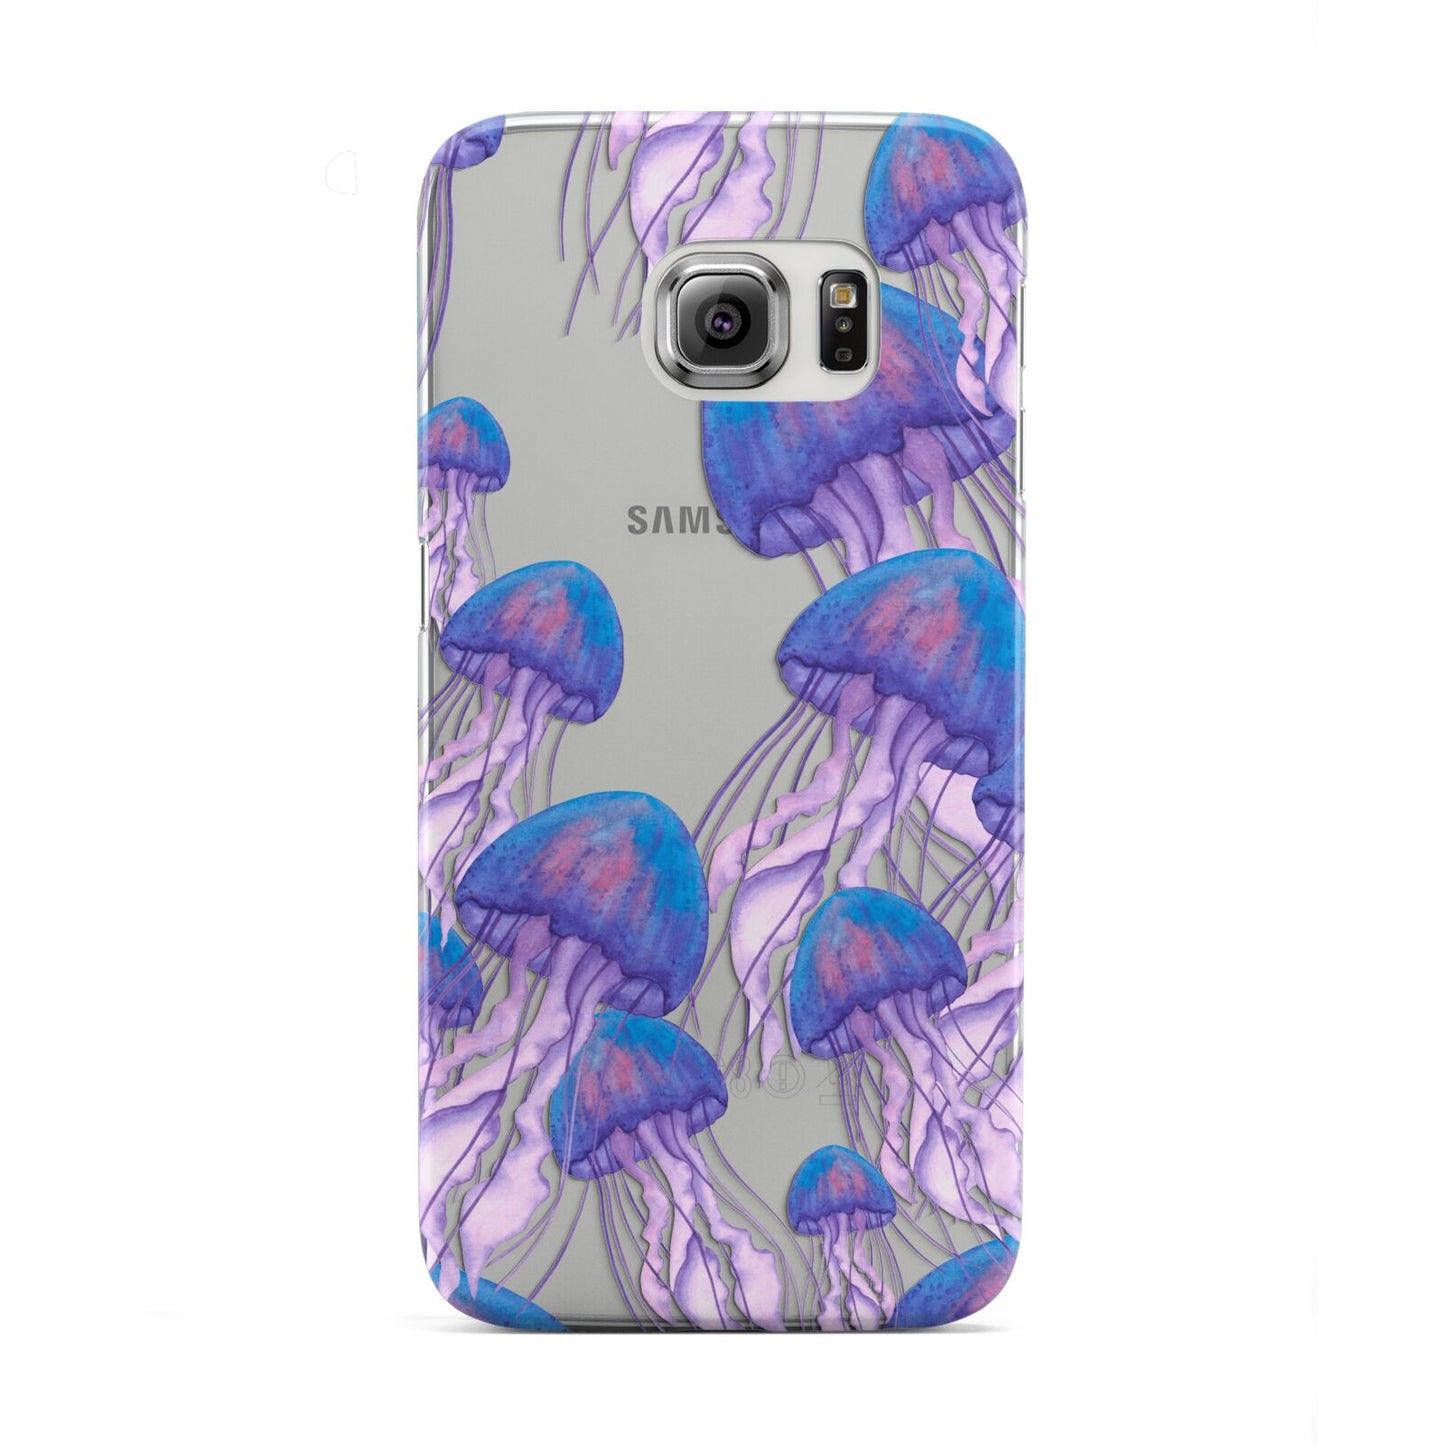 Jellyfish Samsung Galaxy S6 Edge Case